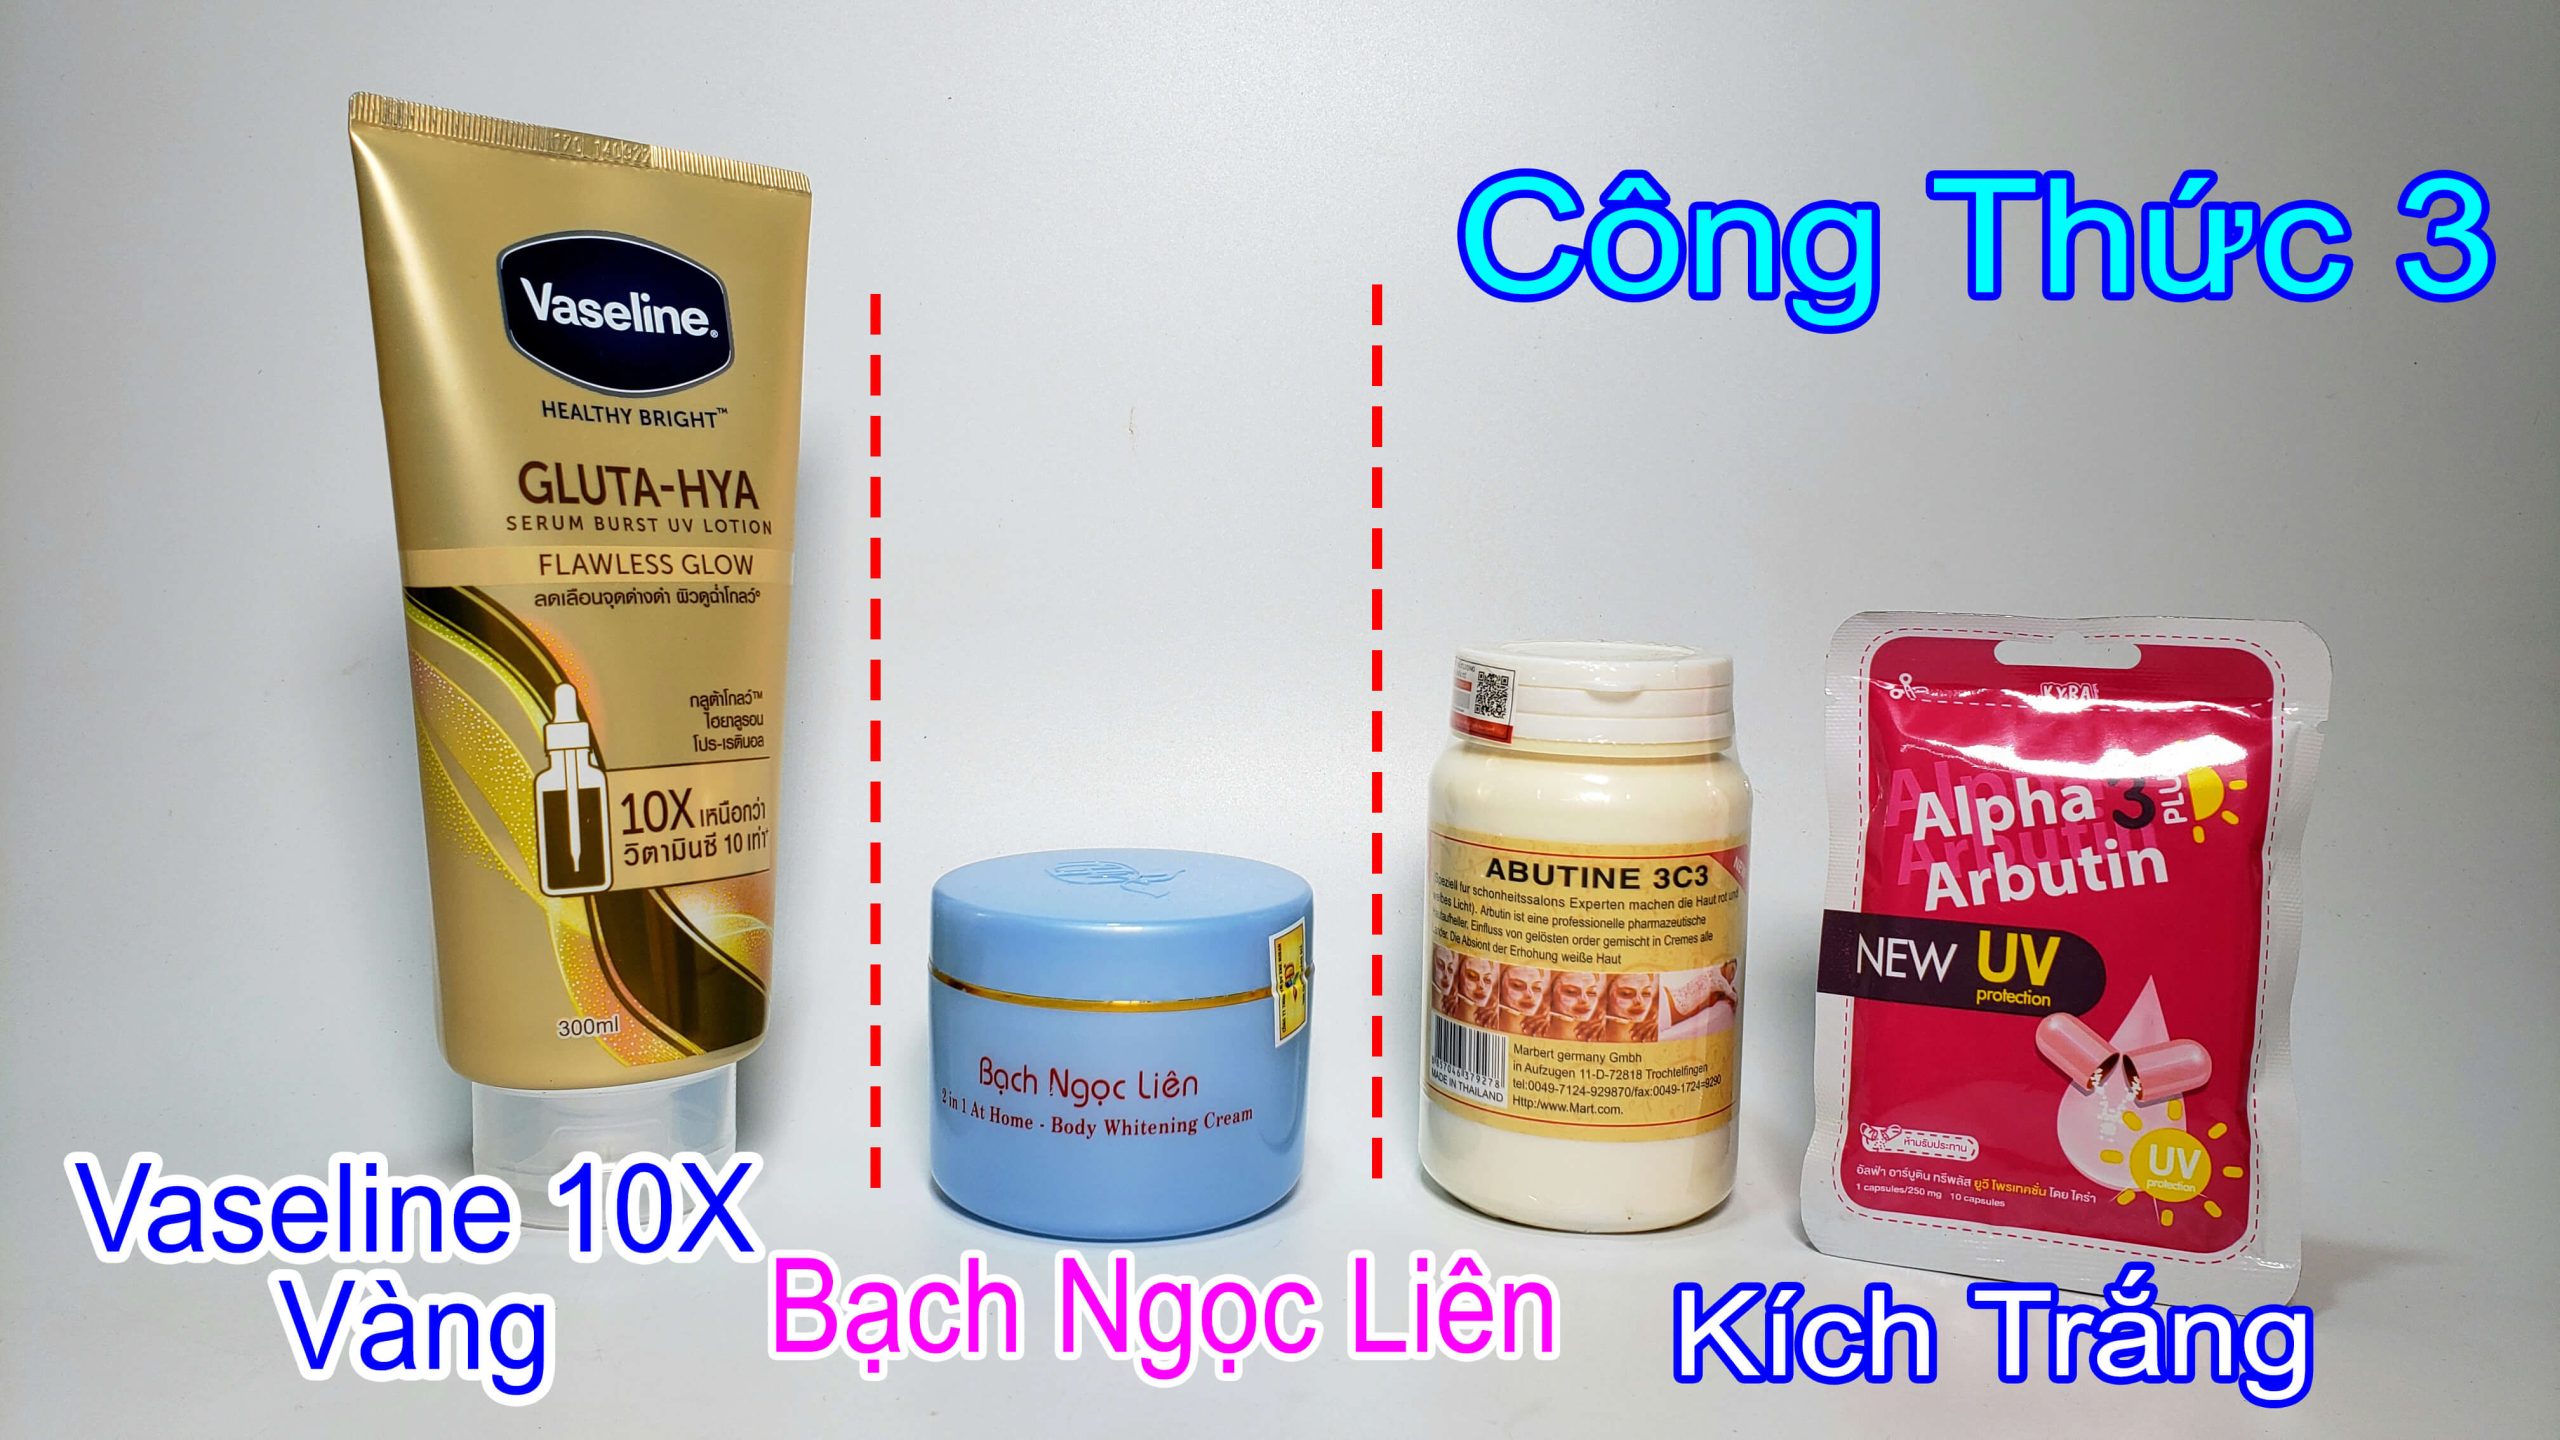 Cong-thuc-tron-kem-bach-ngoc-lien (4)